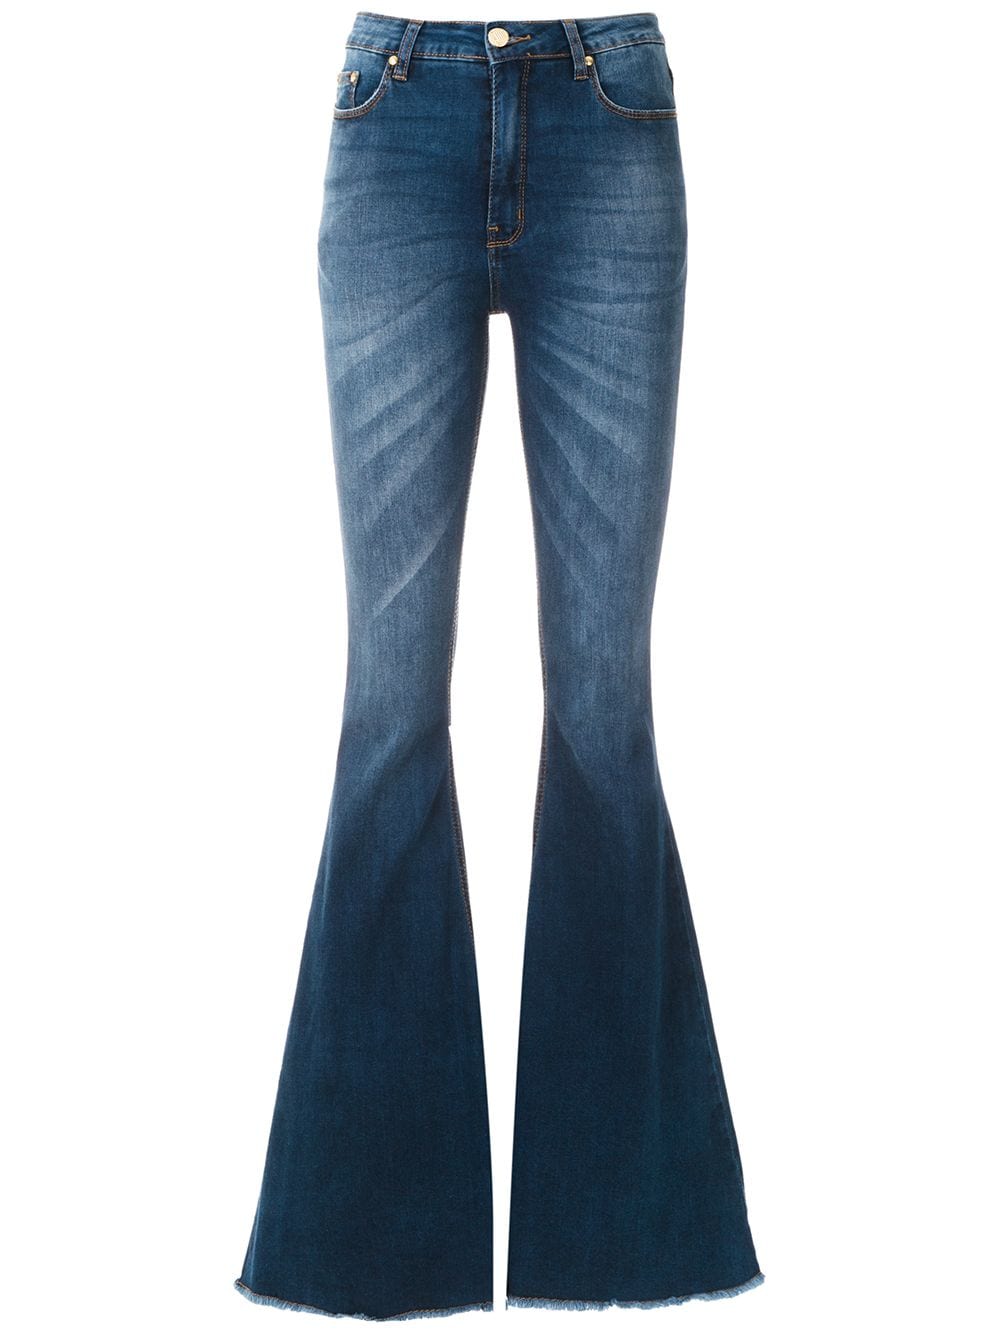 retro jeans sale